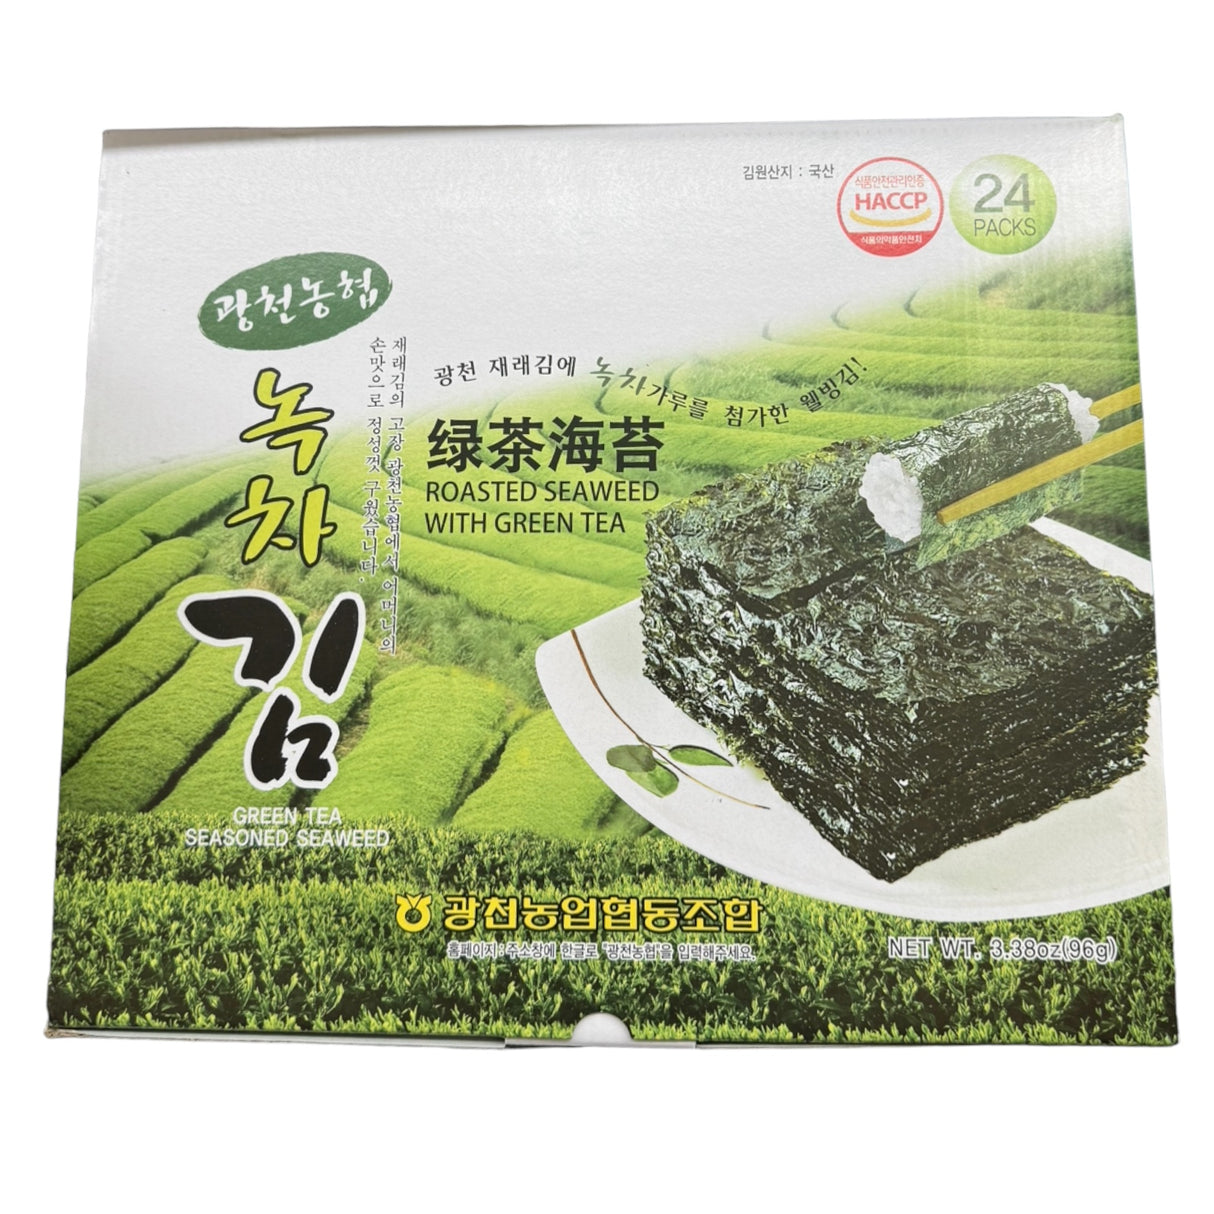 Haccp Roasted Seaweed with Green Tea